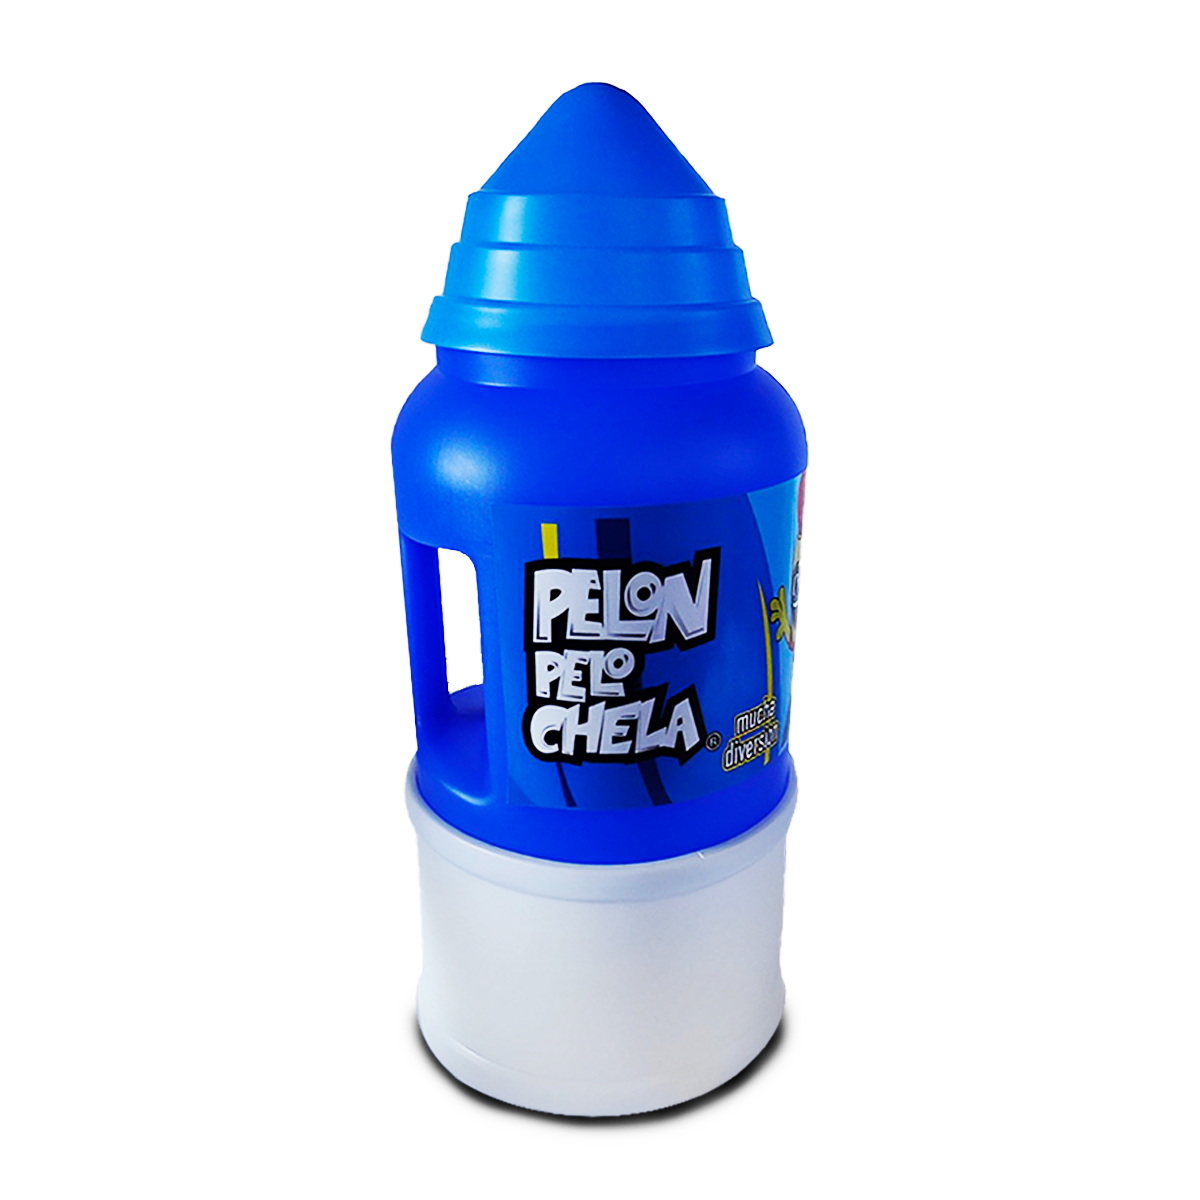 Pelon Pelo Chela / Dulcero 1600 ml